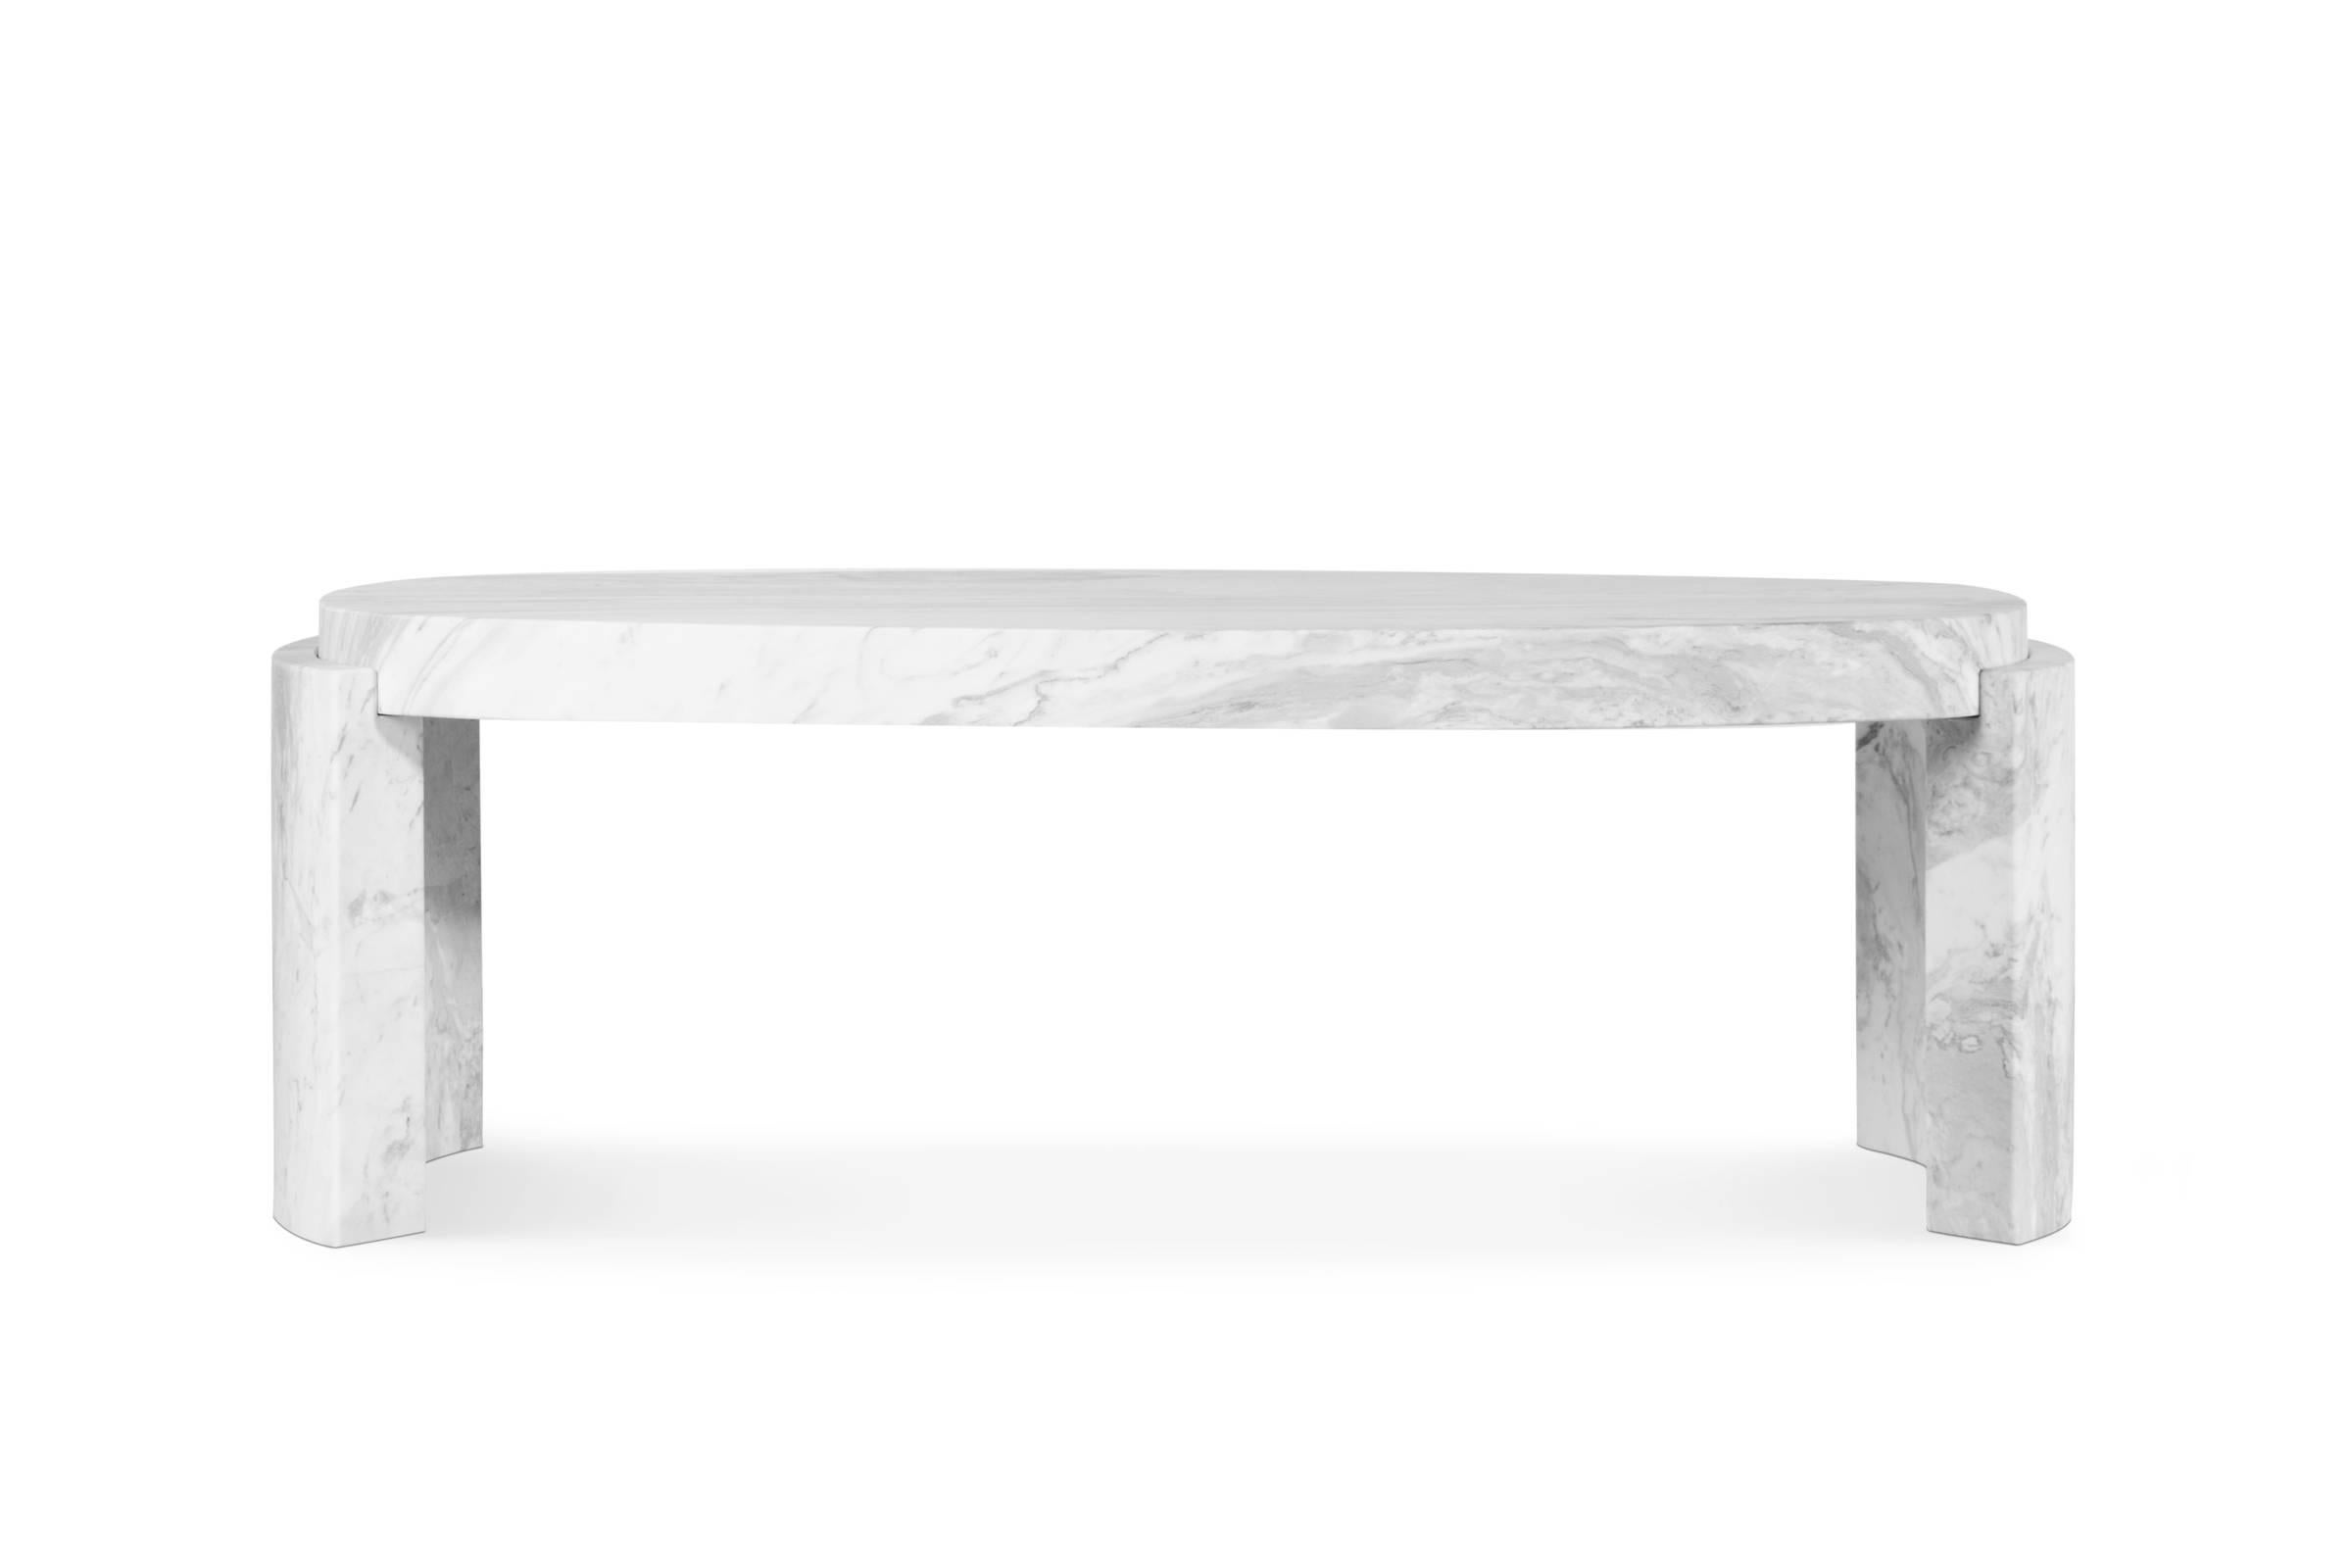 Coffee table Ankara in white Carrara marble,
exceptional piece.
